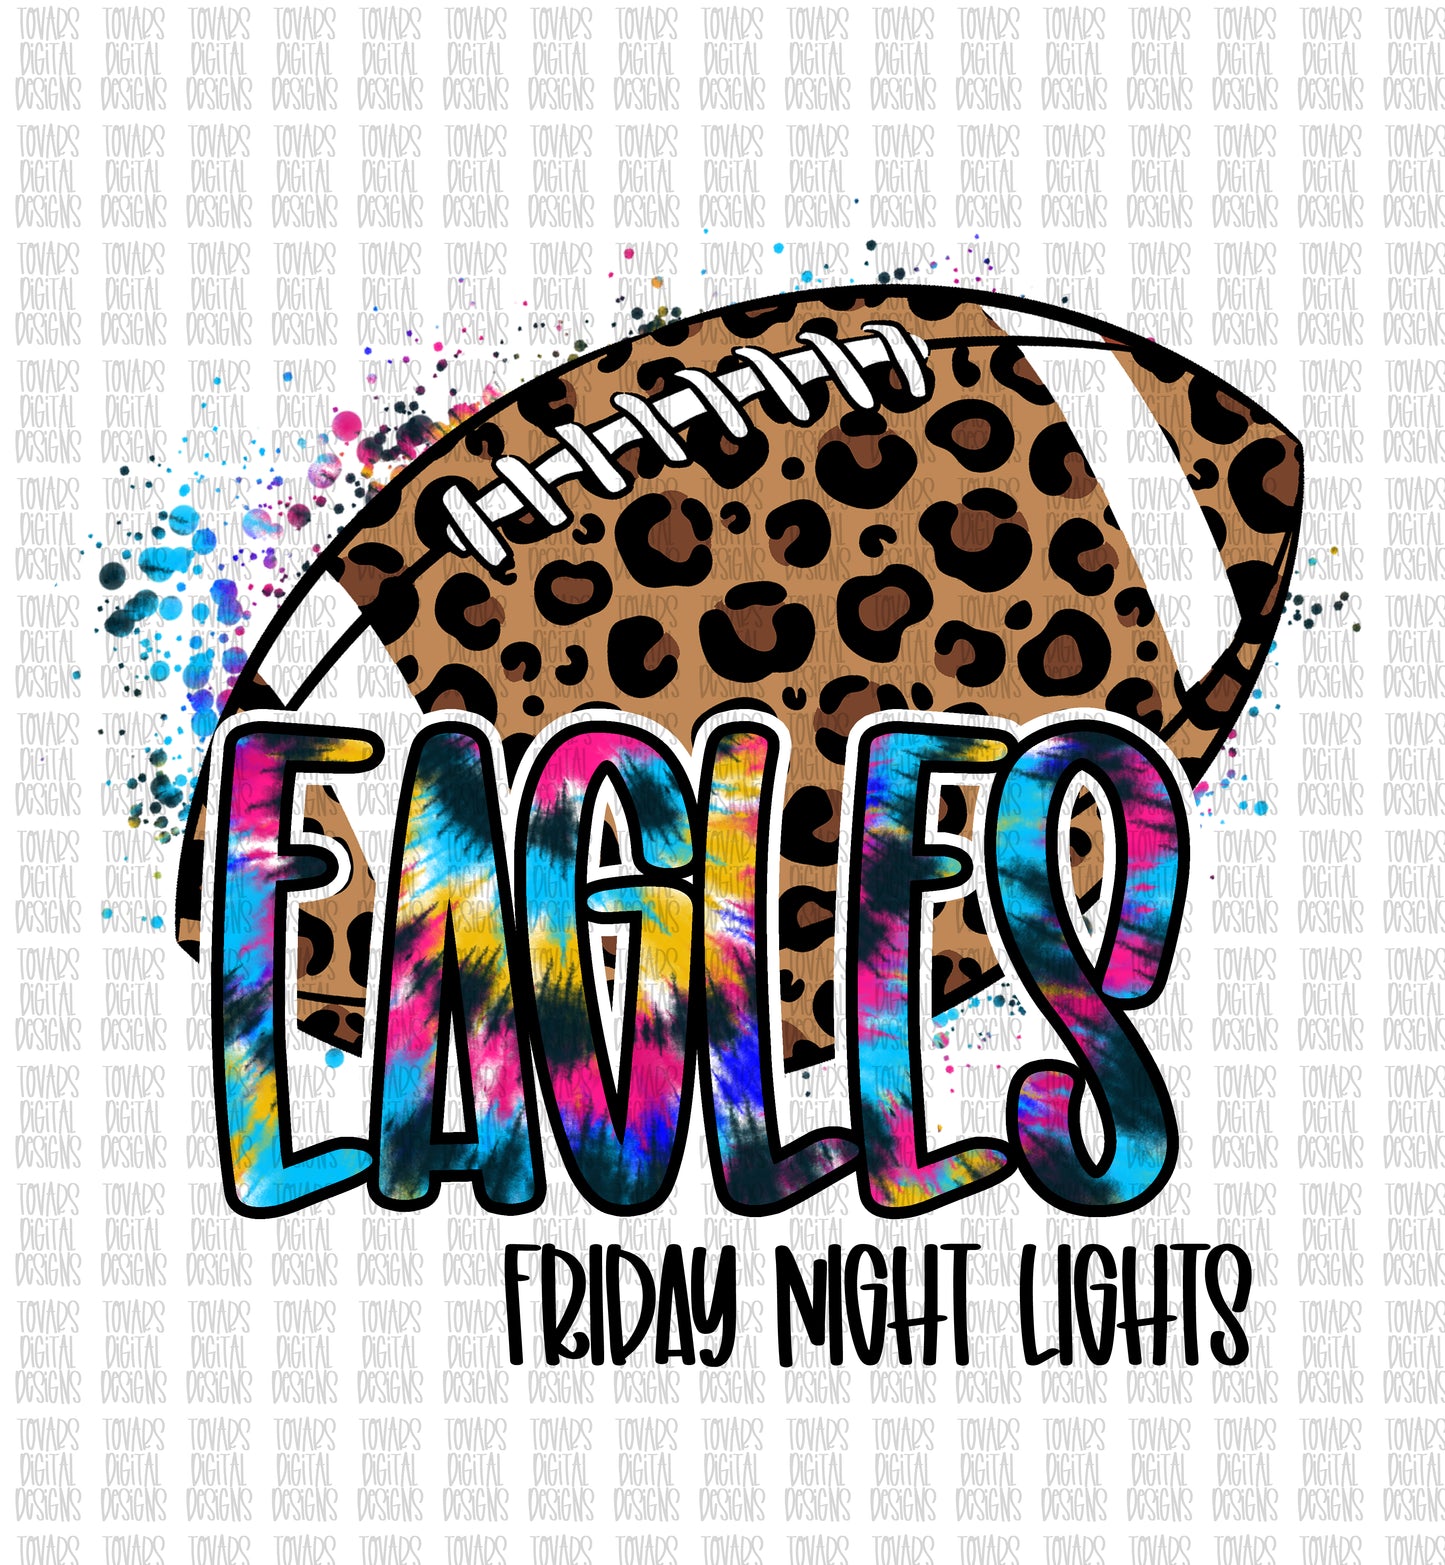 Eagles Leopard Tie Dye Friday night lights png file download